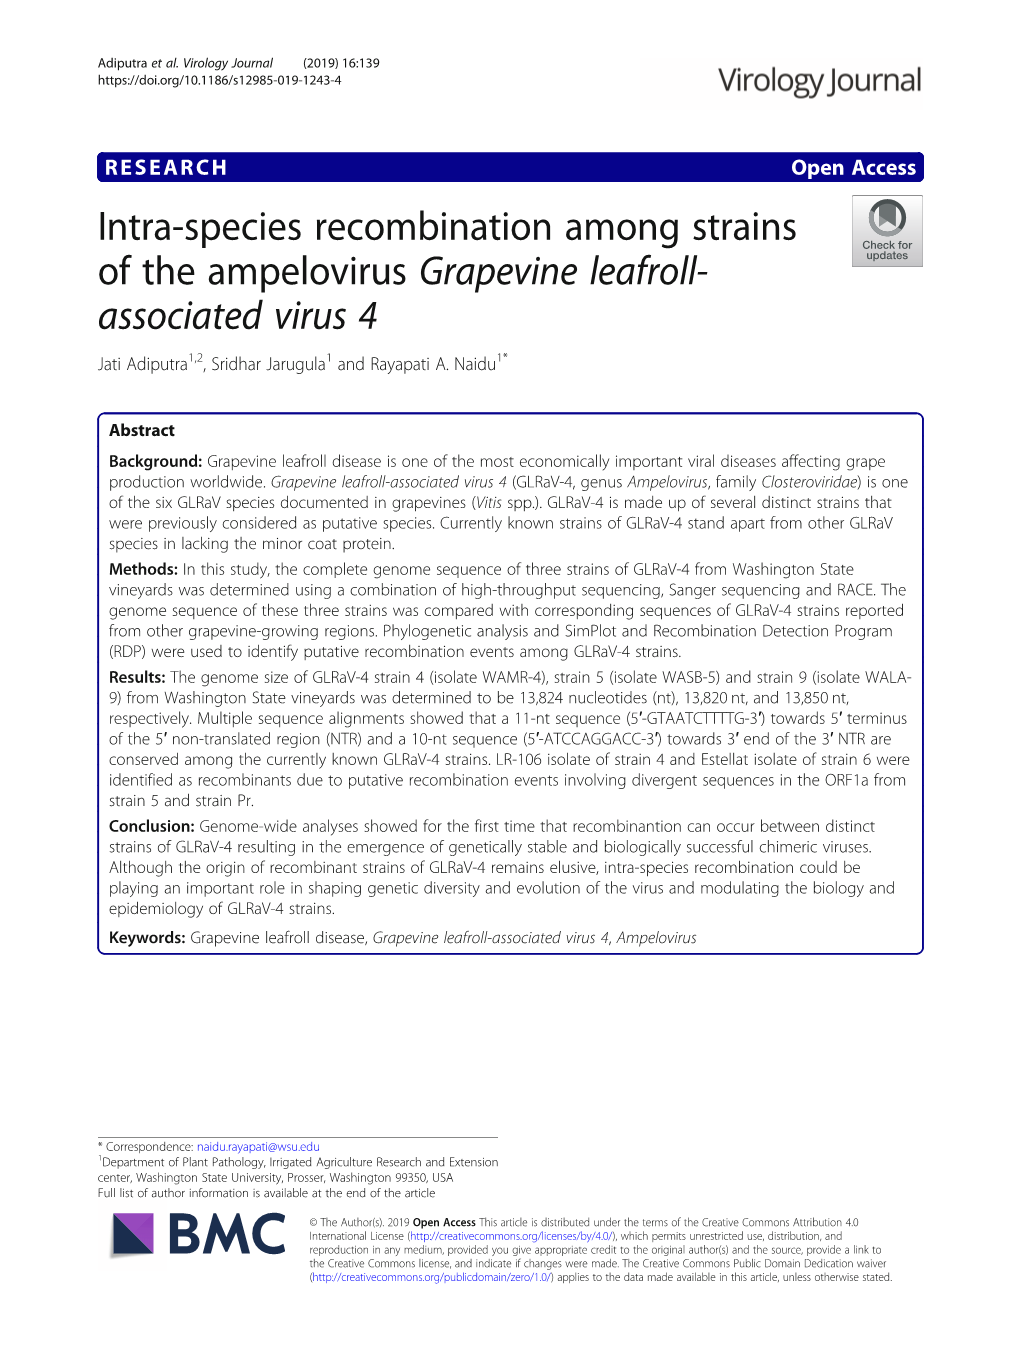 Intra-Species Recombination Among Strains of the Ampelovirus Grapevine Leafroll- Associated Virus 4 Jati Adiputra1,2, Sridhar Jarugula1 and Rayapati A